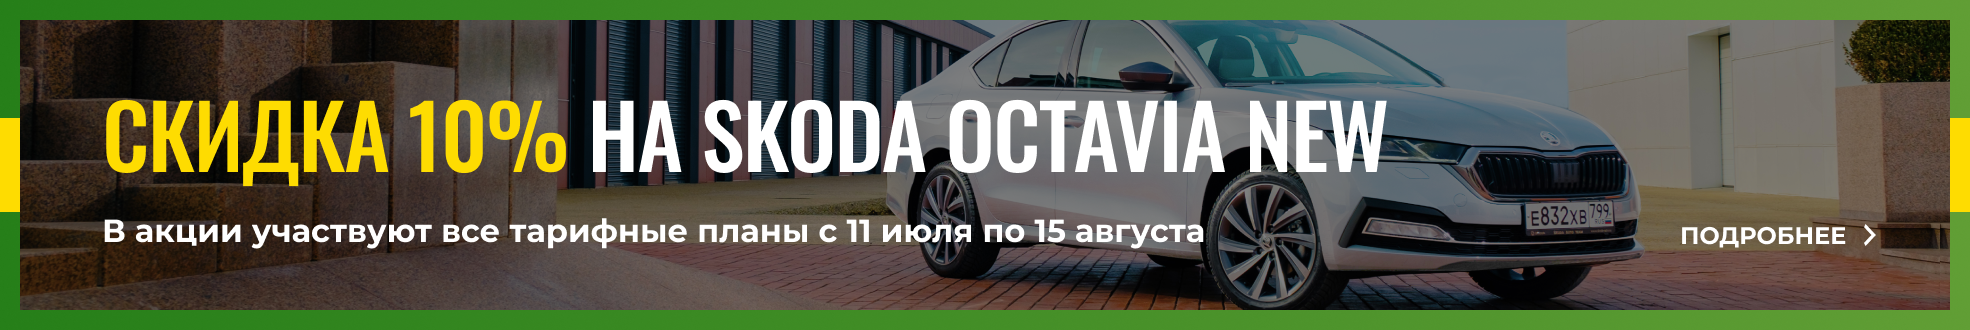 Скидка 10% на Skoda Octavia NEW